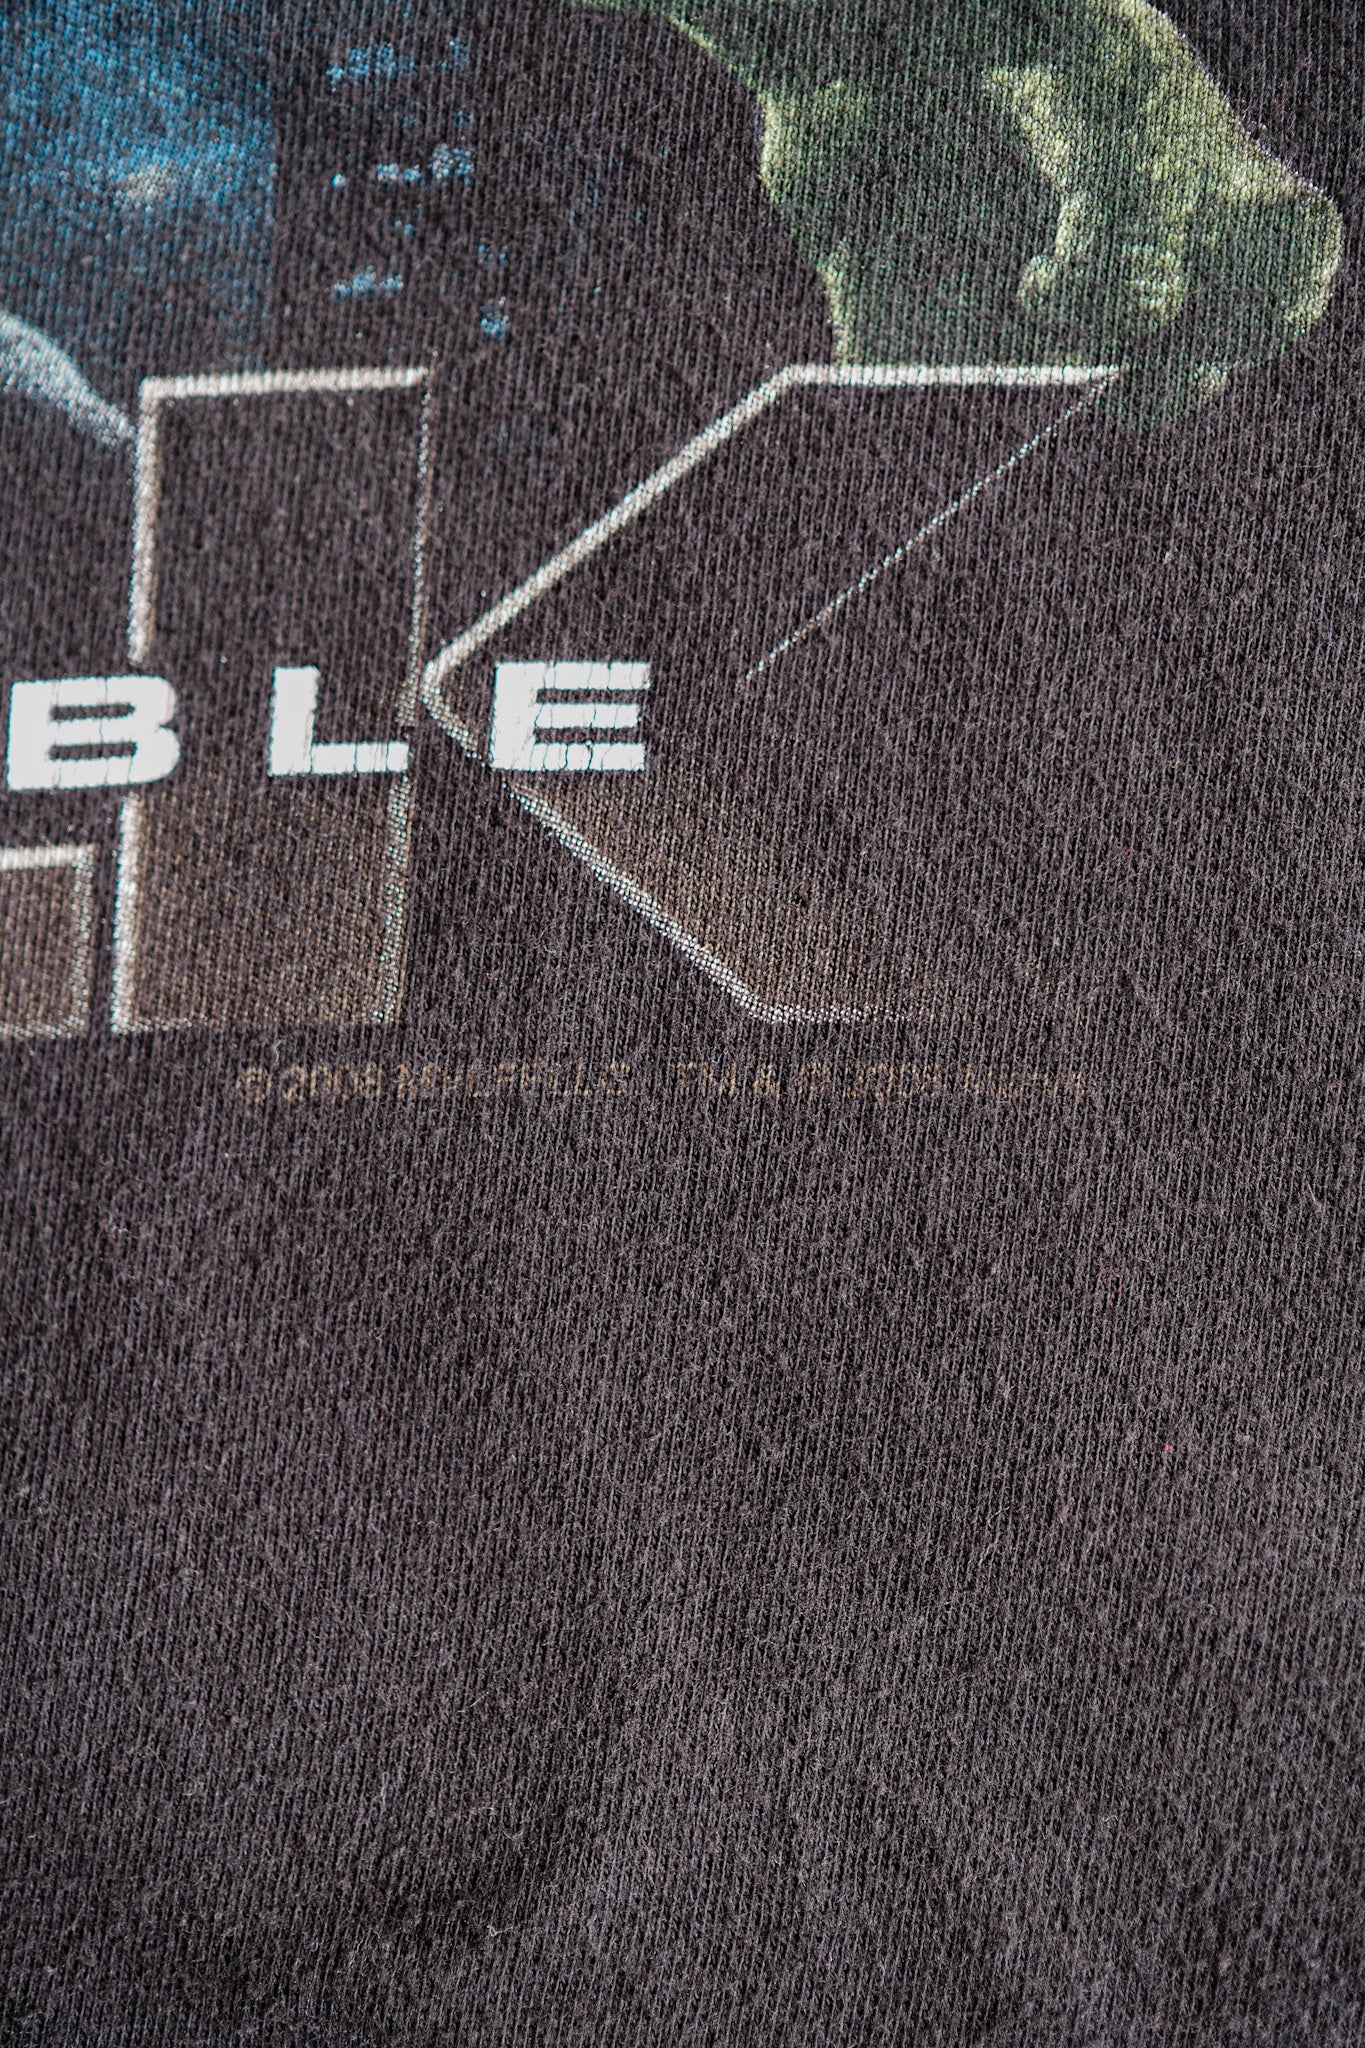 [~ 00's] Vintage Movie Print T-shirt size.xl "The Incredible Hulk"